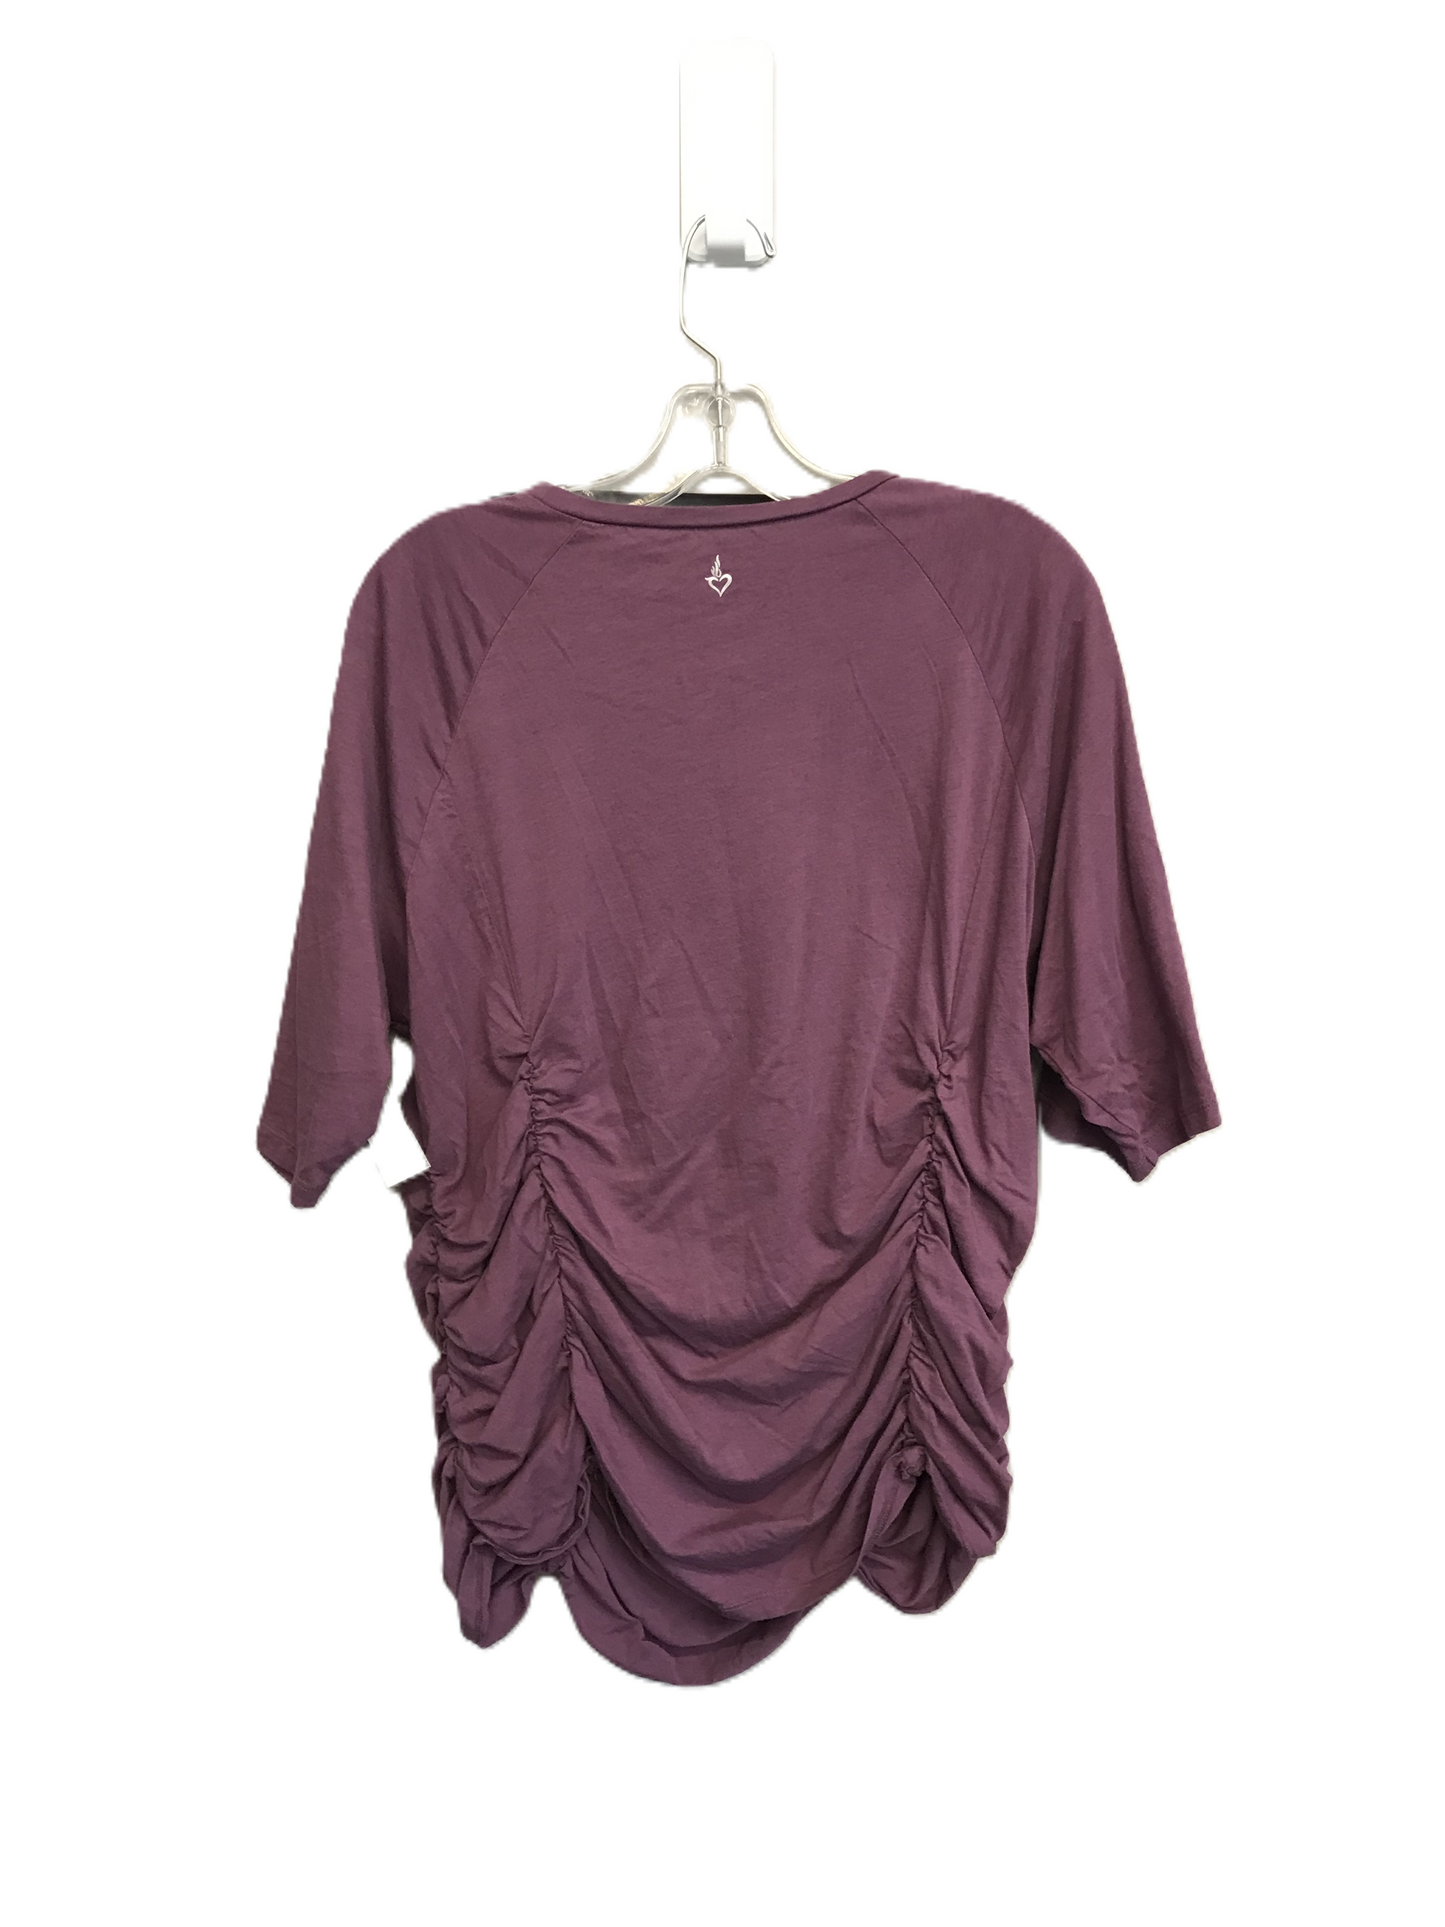 Purple Athletic Top Short Sleeve By Torrid, Size: 2x